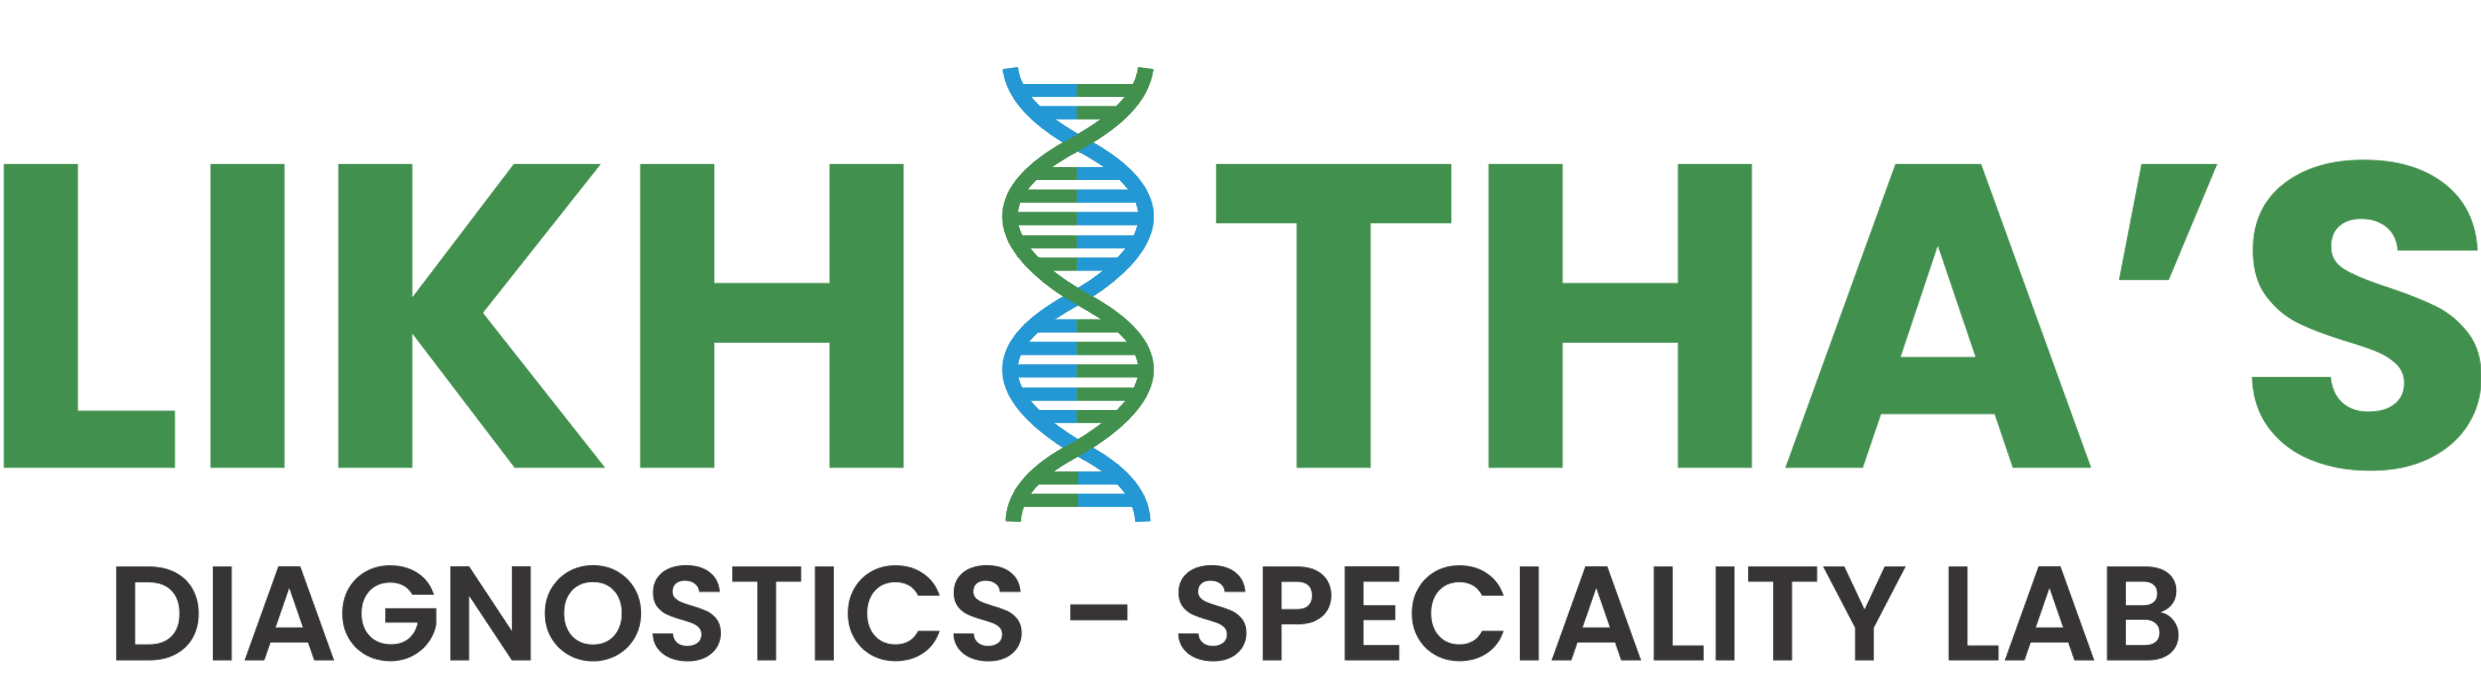 Likhitha Diagnostic  Specialty Lab